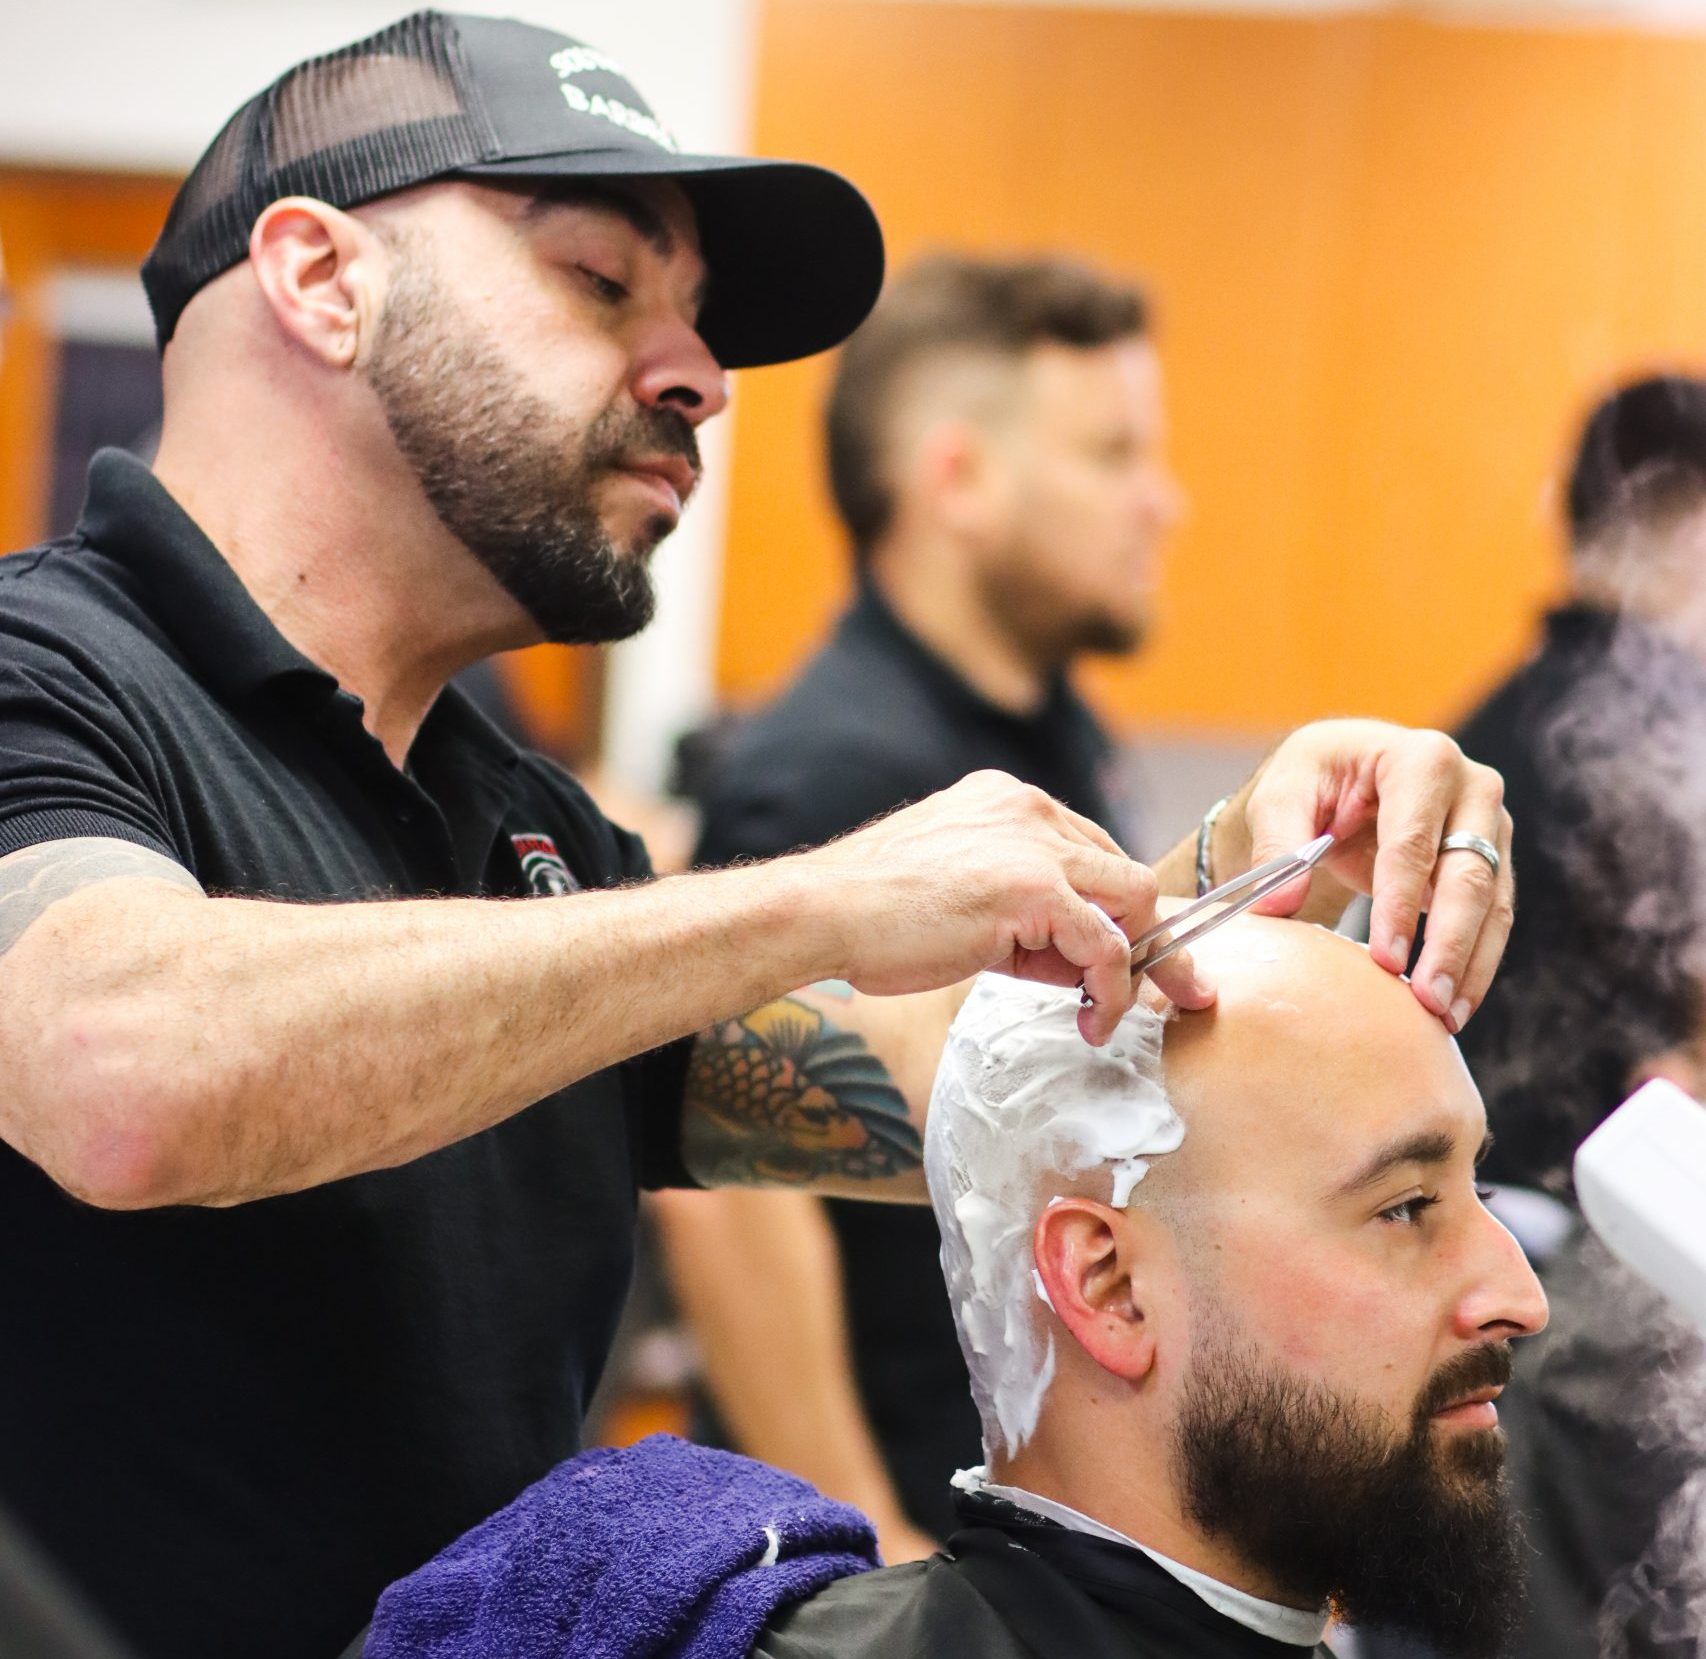 Instructor shaving a customer's hair